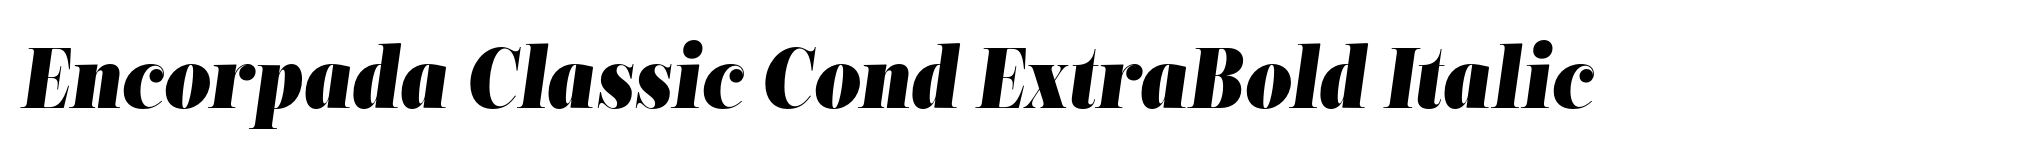 Encorpada Classic Cond ExtraBold Italic image